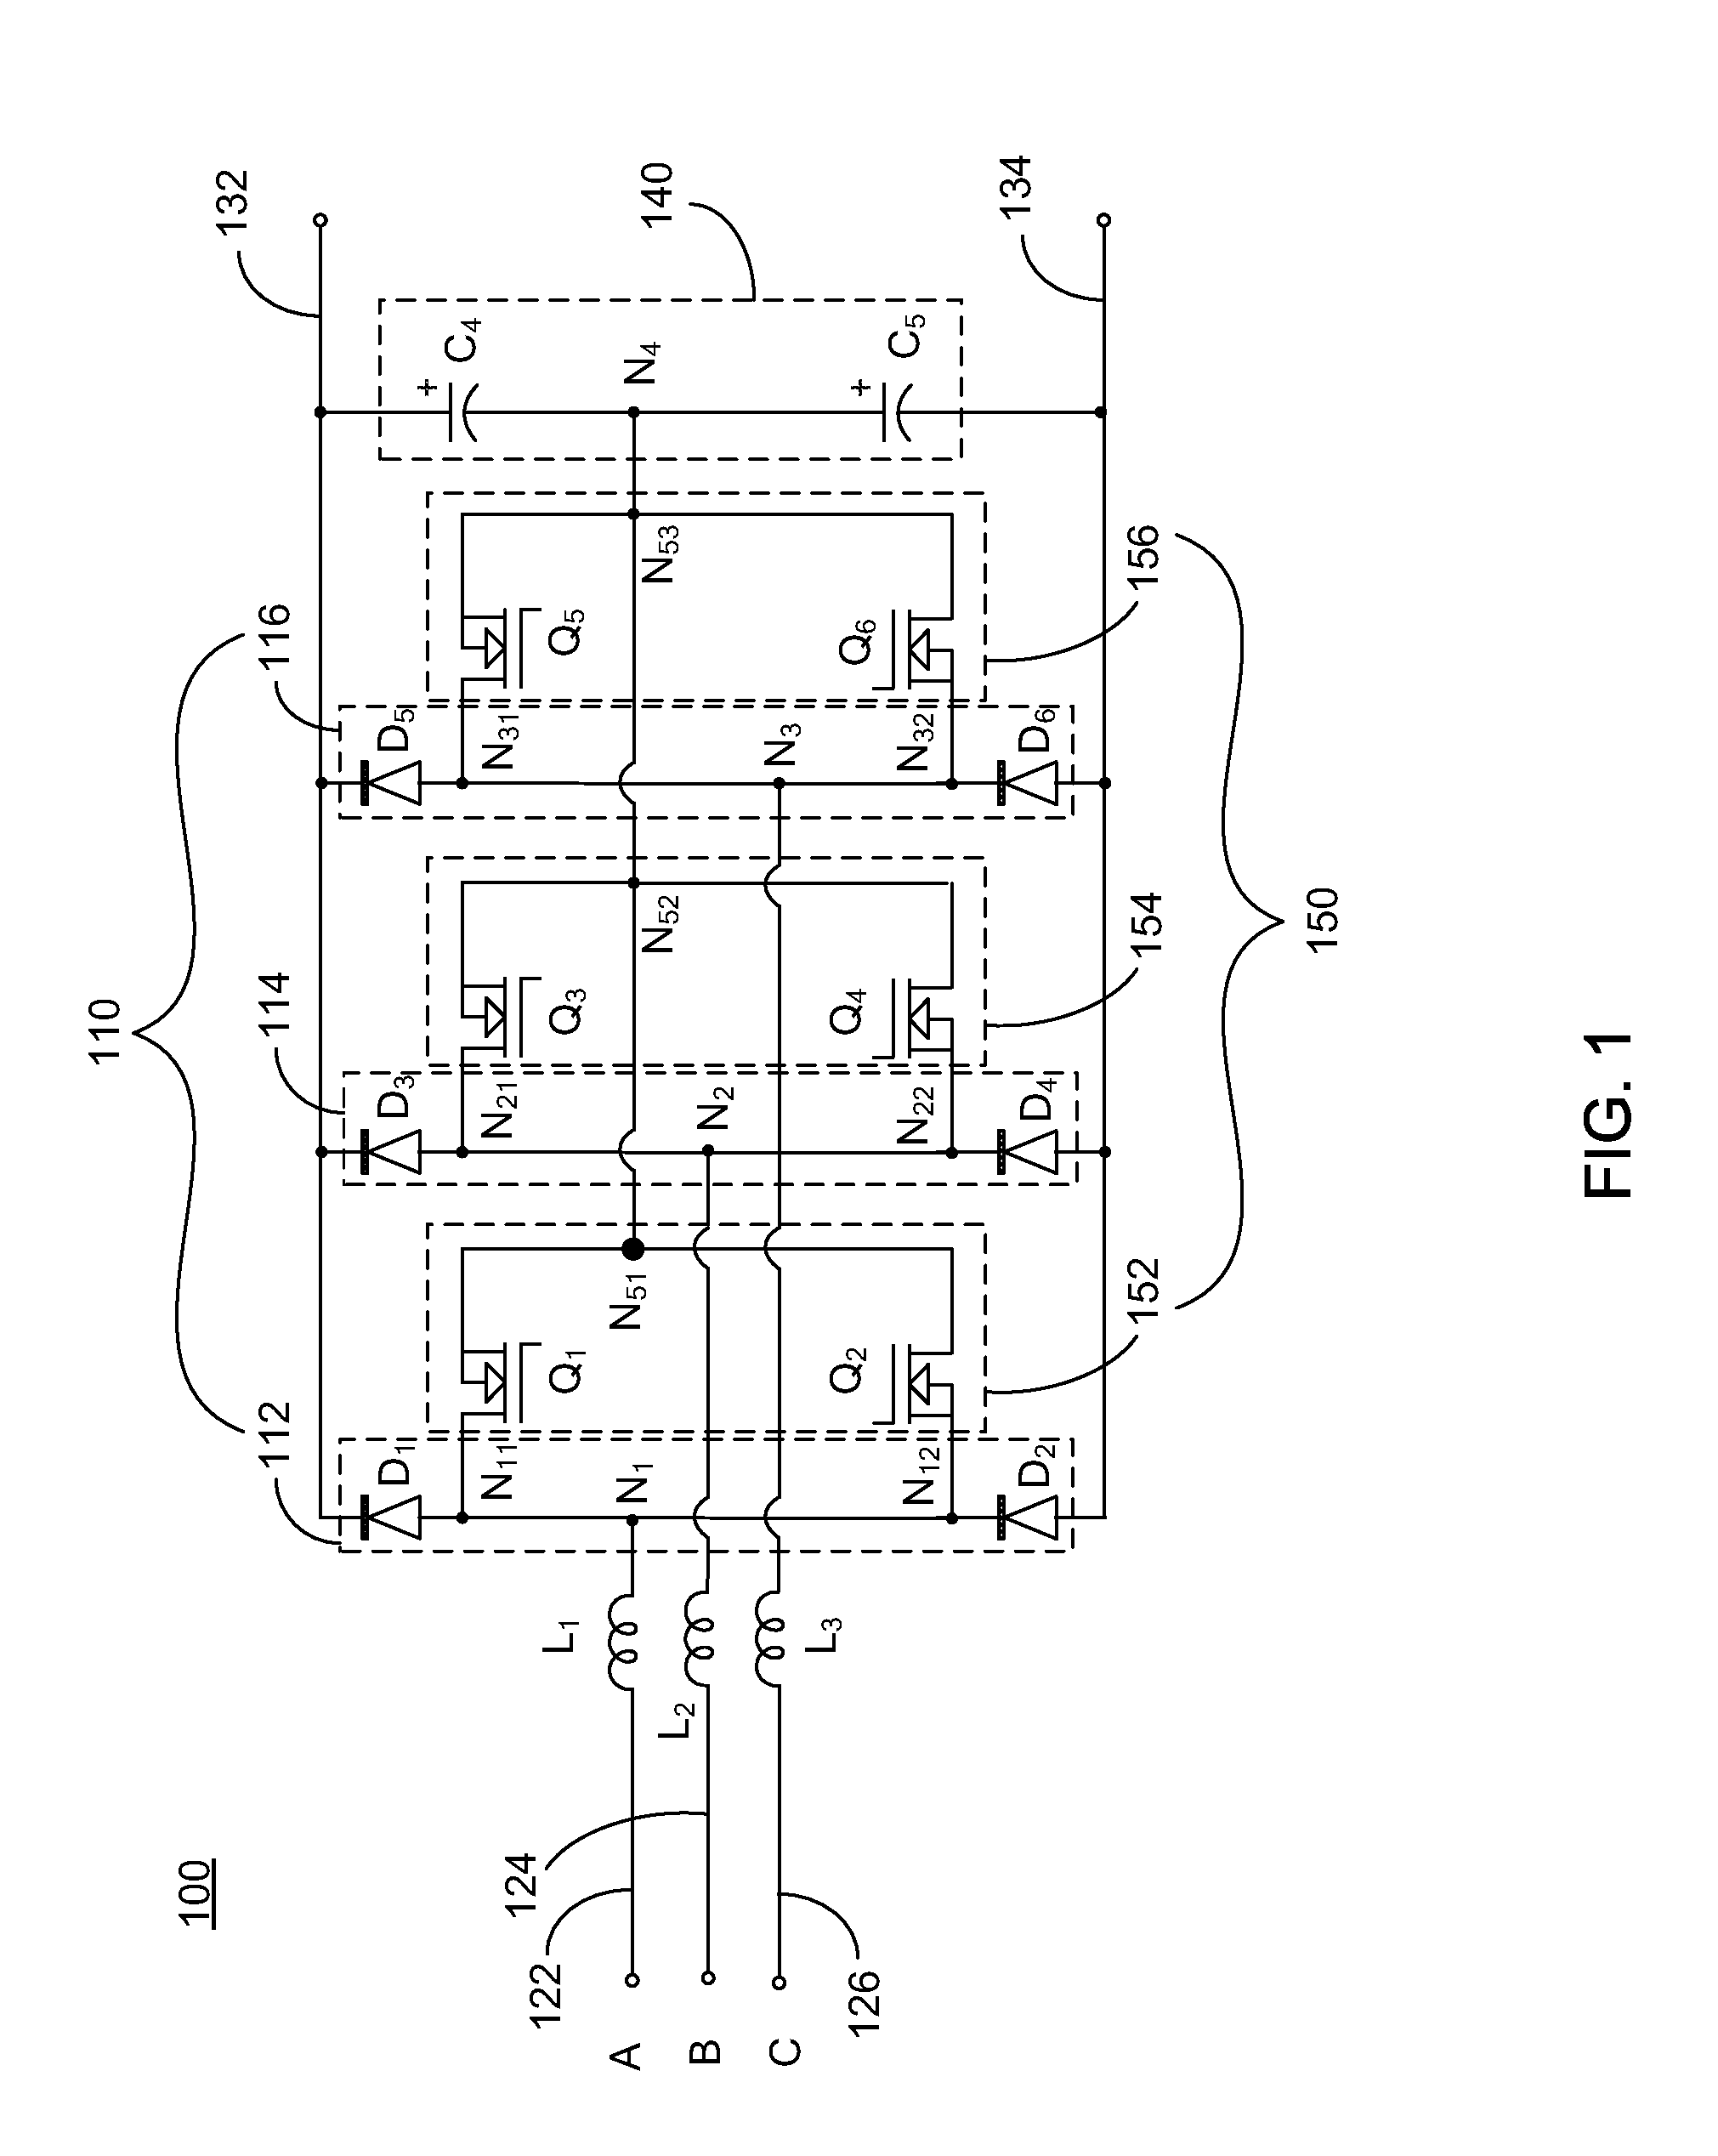 Three-phase rectifier circuit